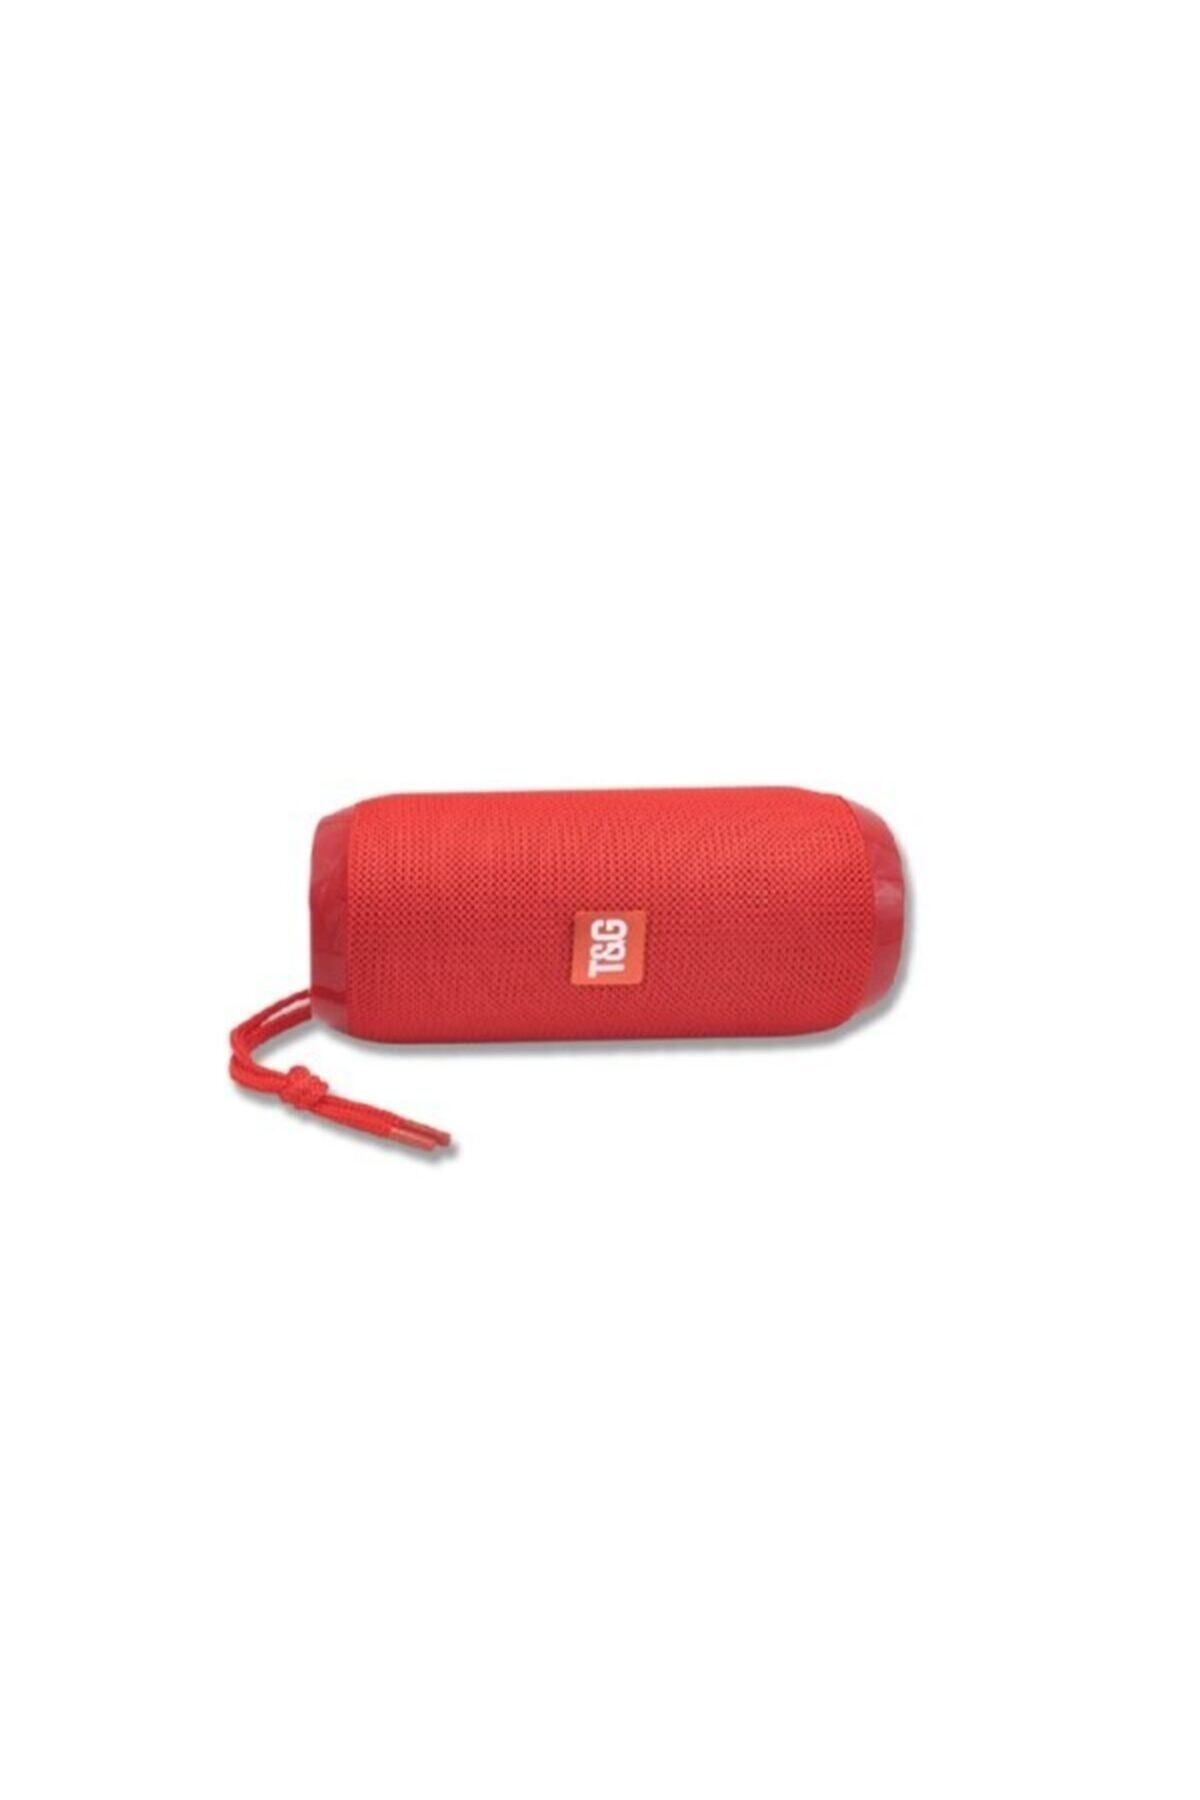 Mopal Technoguru Tehno Tm Tehno Tm Tg-117 Bluetooth Speaker Hoparlör Kırmızı